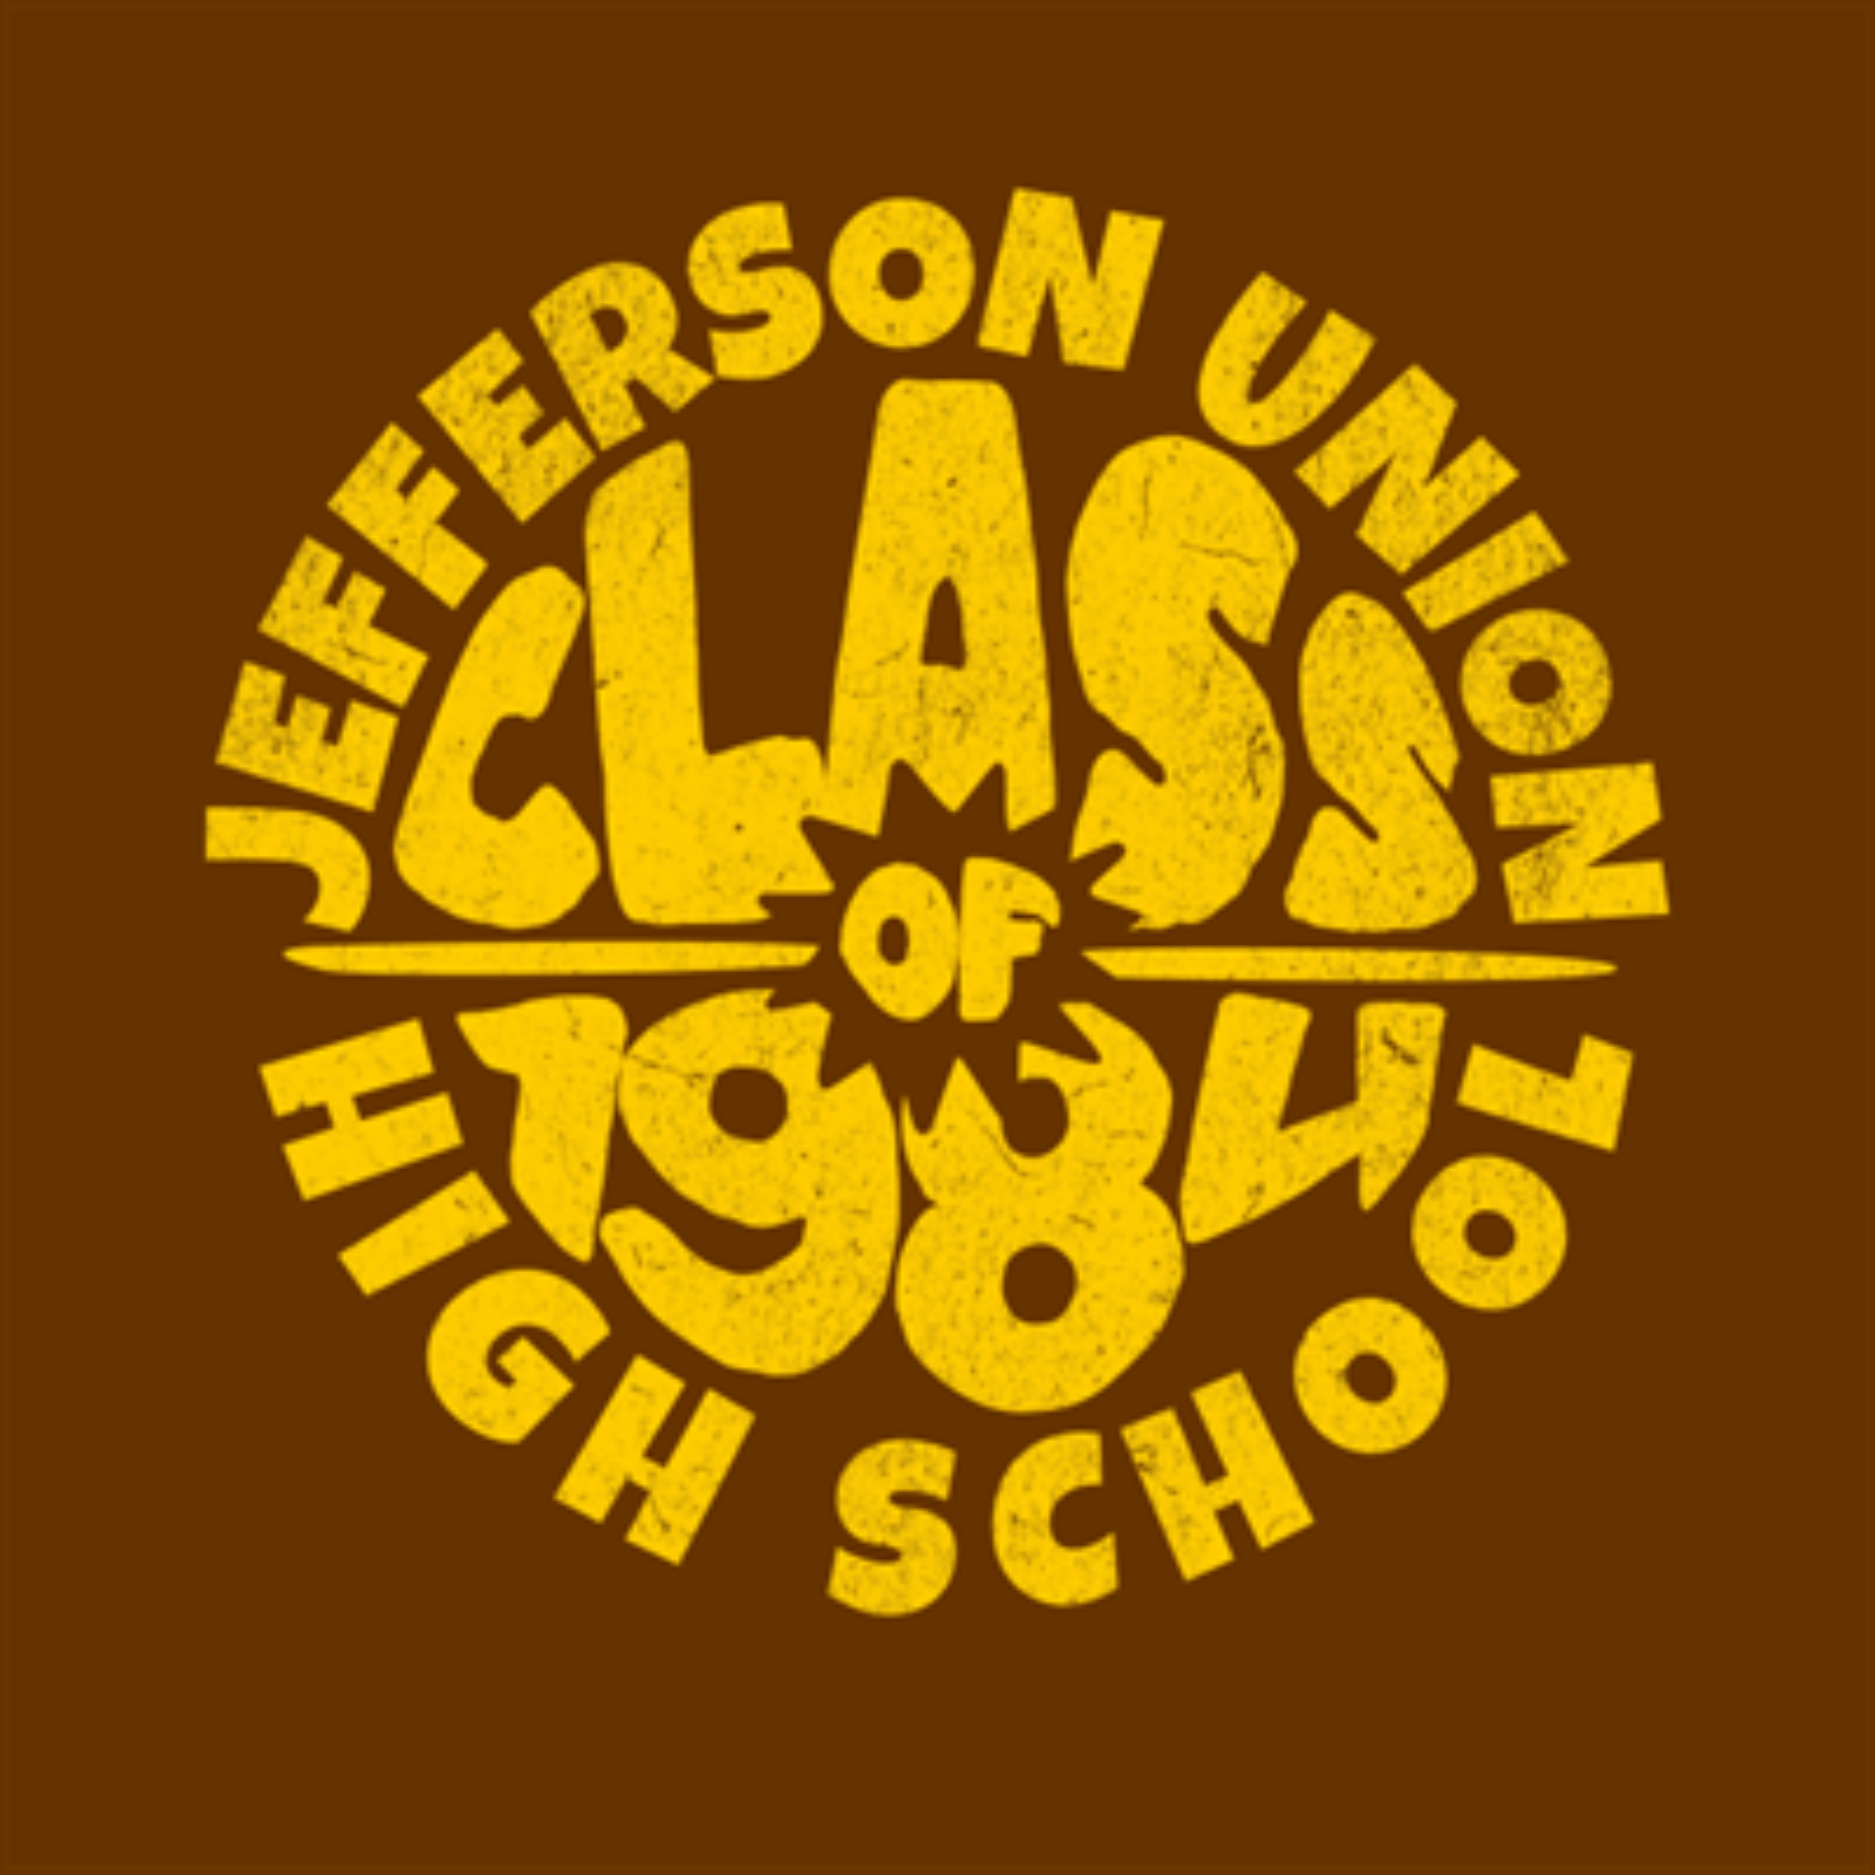 Jefferson Union High School Class of 1984 logo